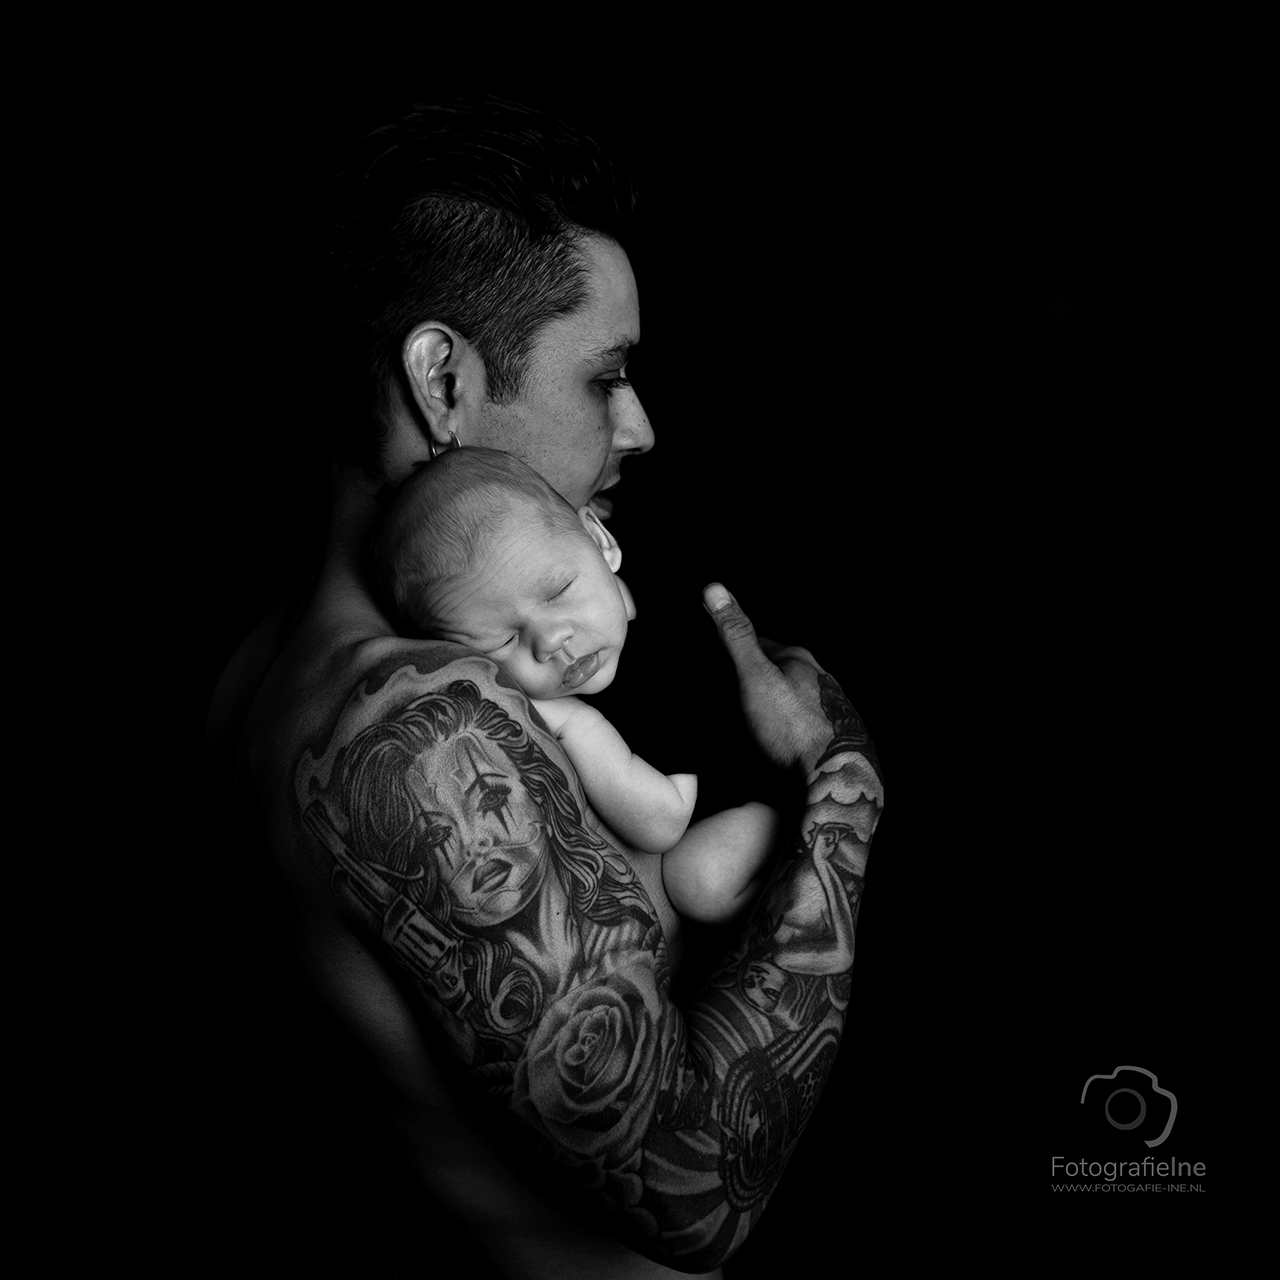 Fotografie Ine newborn fotoshoot baby schouder zwart wit stoer